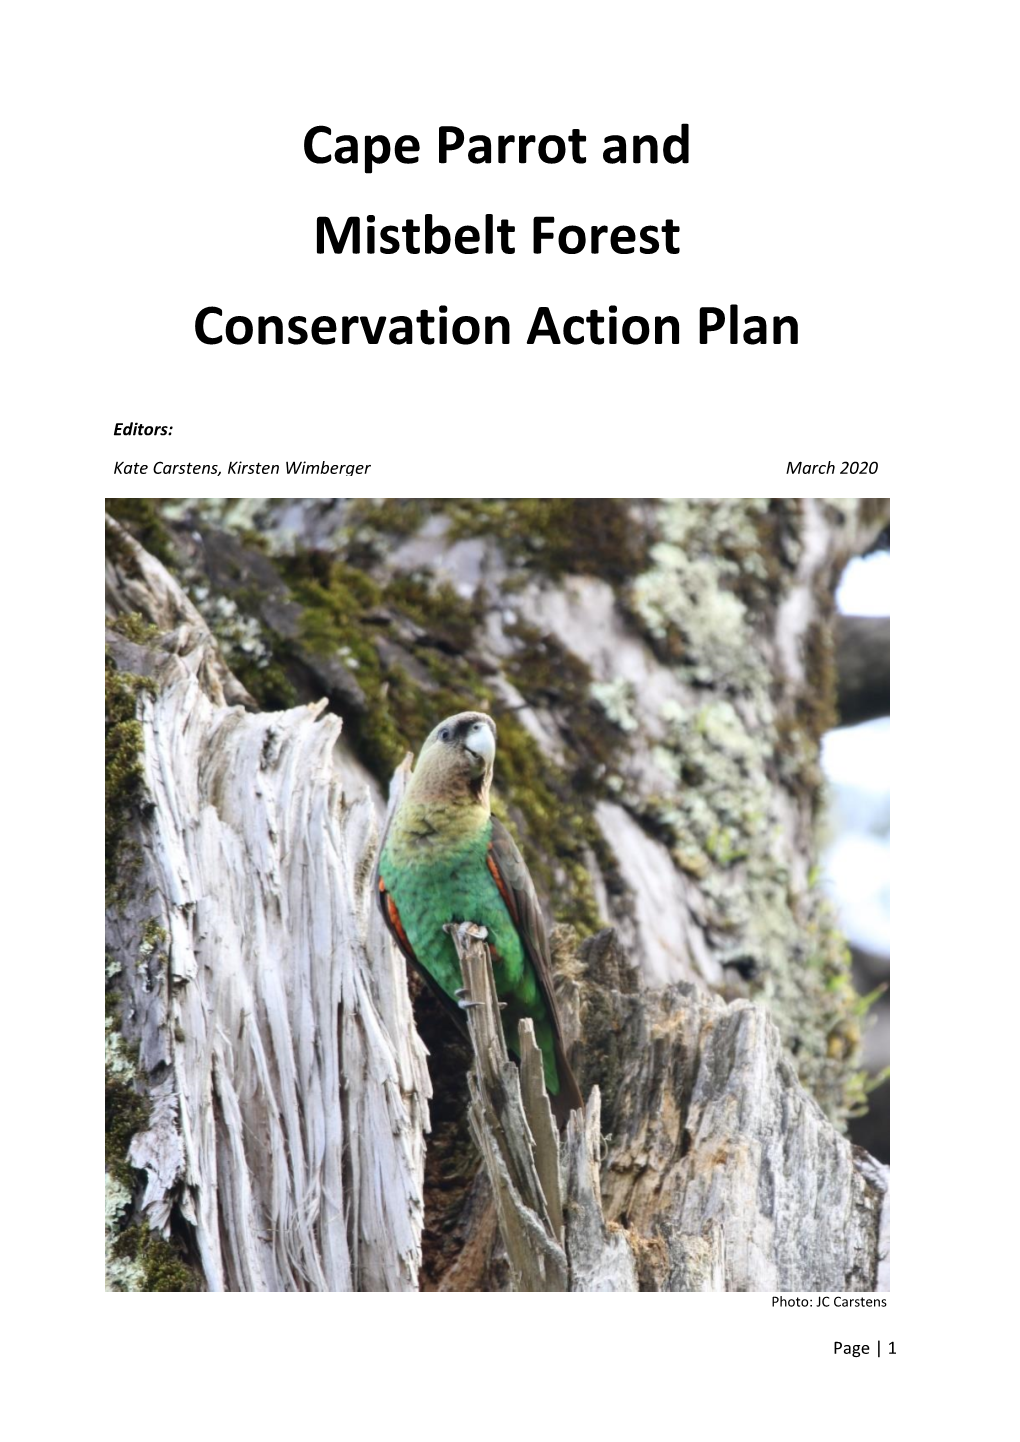 Cape Parrot and Mistbelt Forest Conservation Action Plan